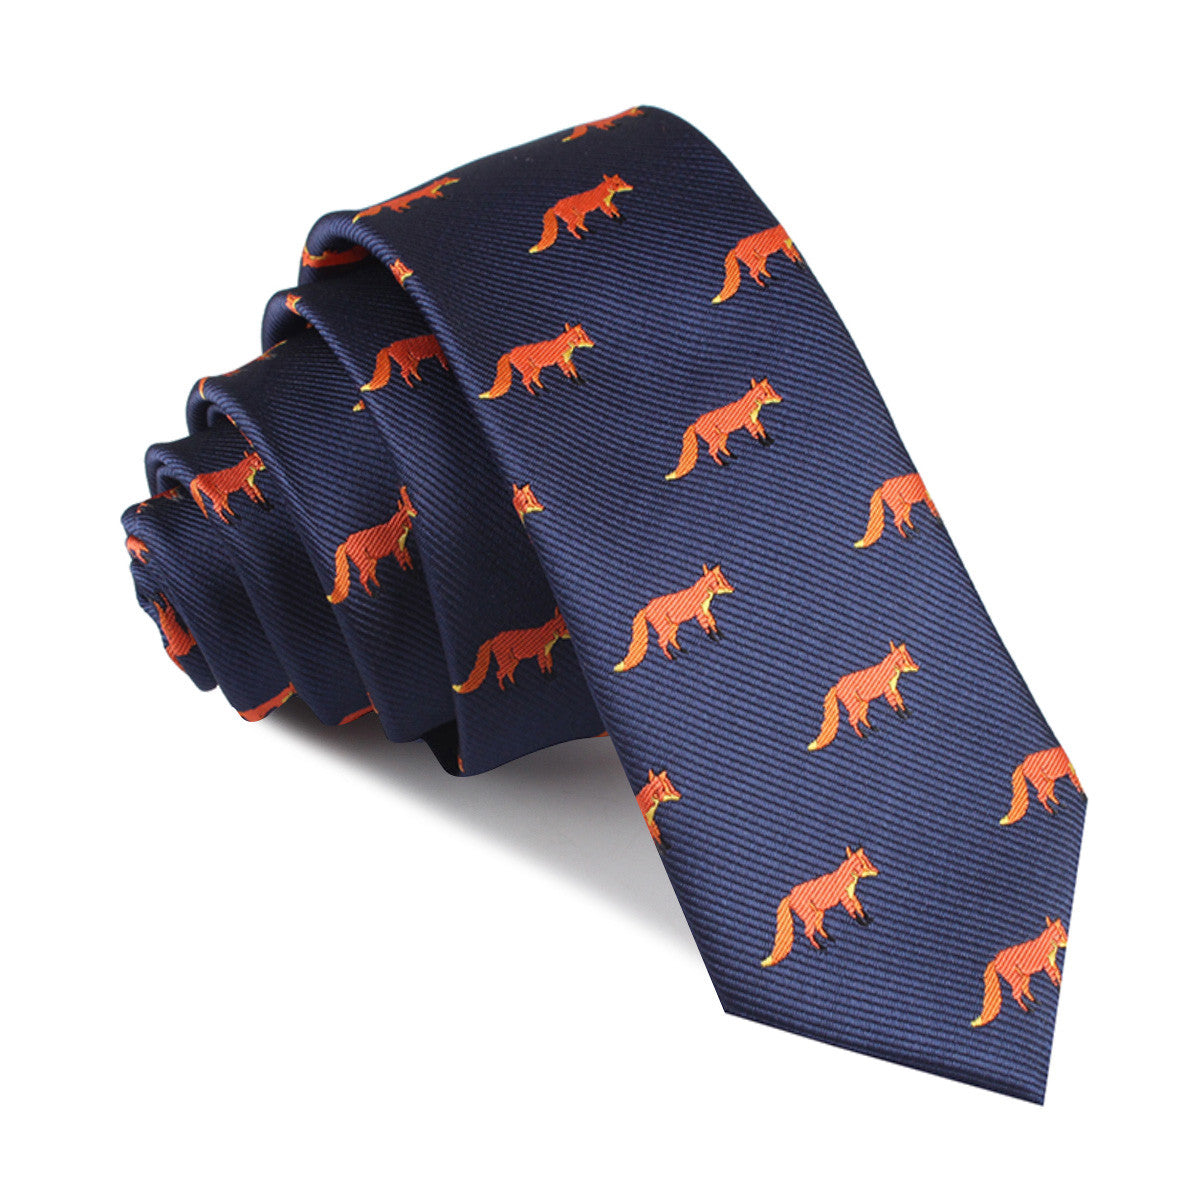 Mr Fox Skinny Tie